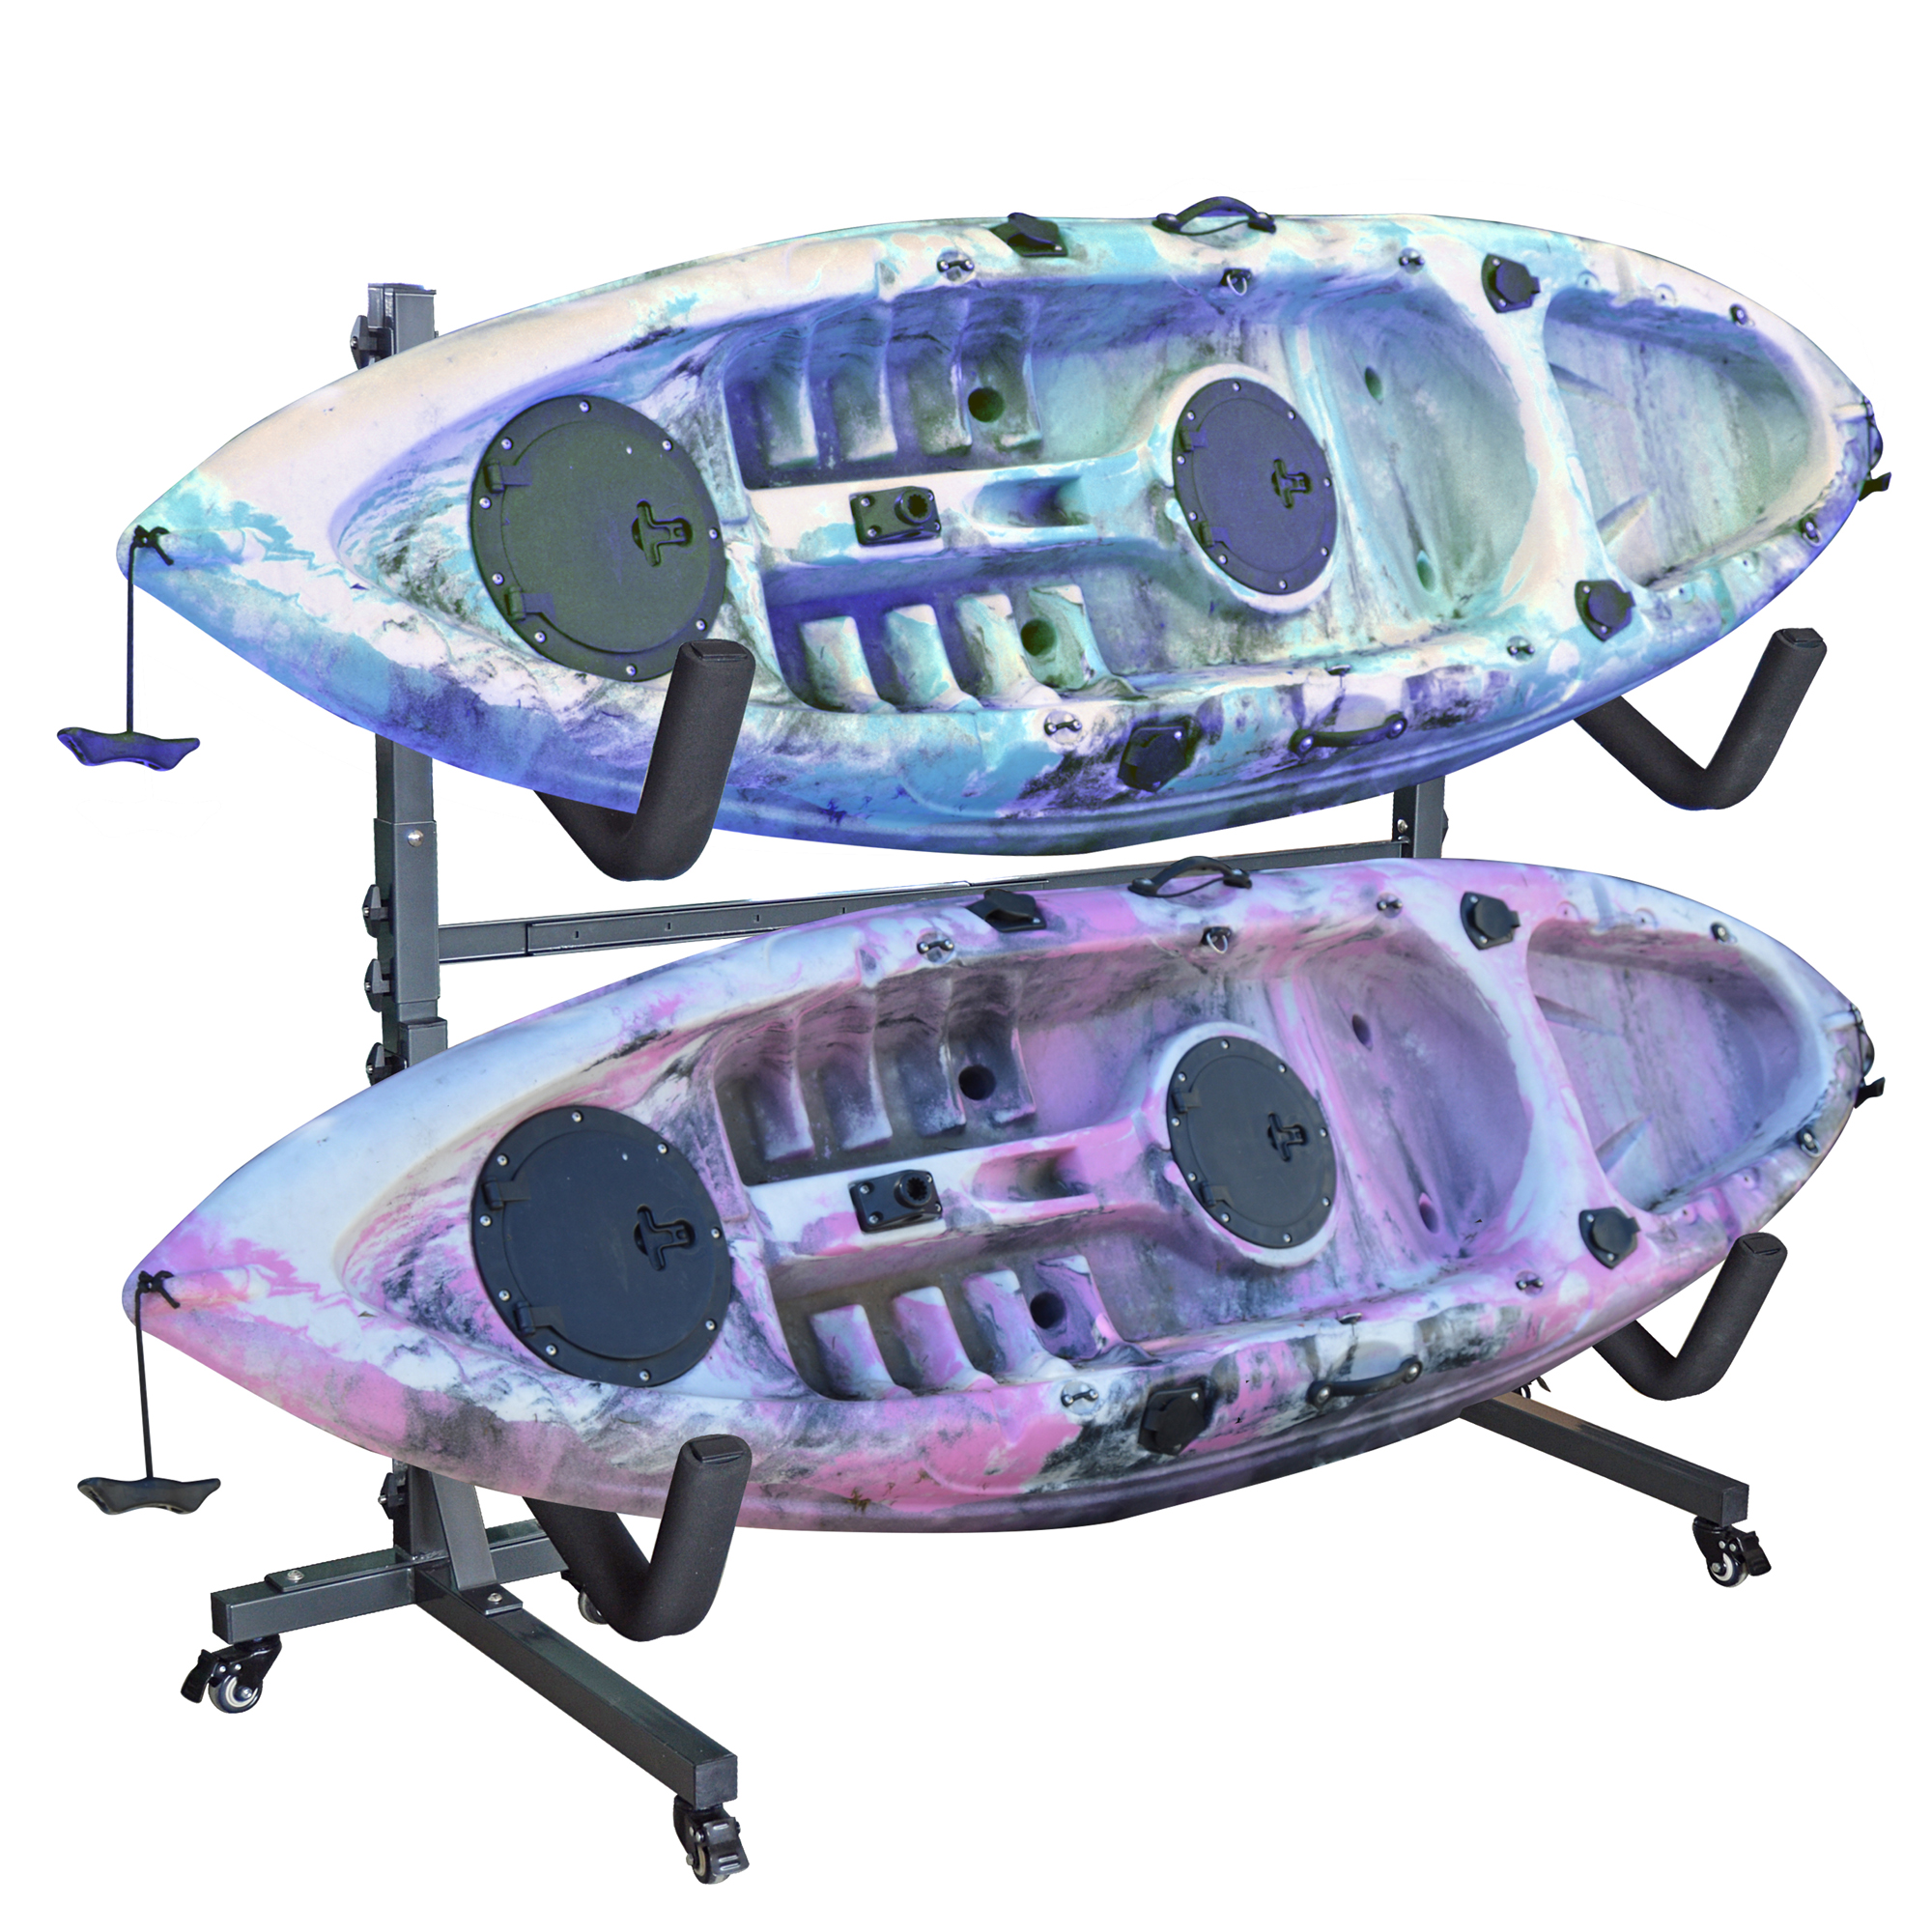 Kayak SUP Paddle Board Storage 2 Kayaks Display Rack Mount Lockdable Wheels